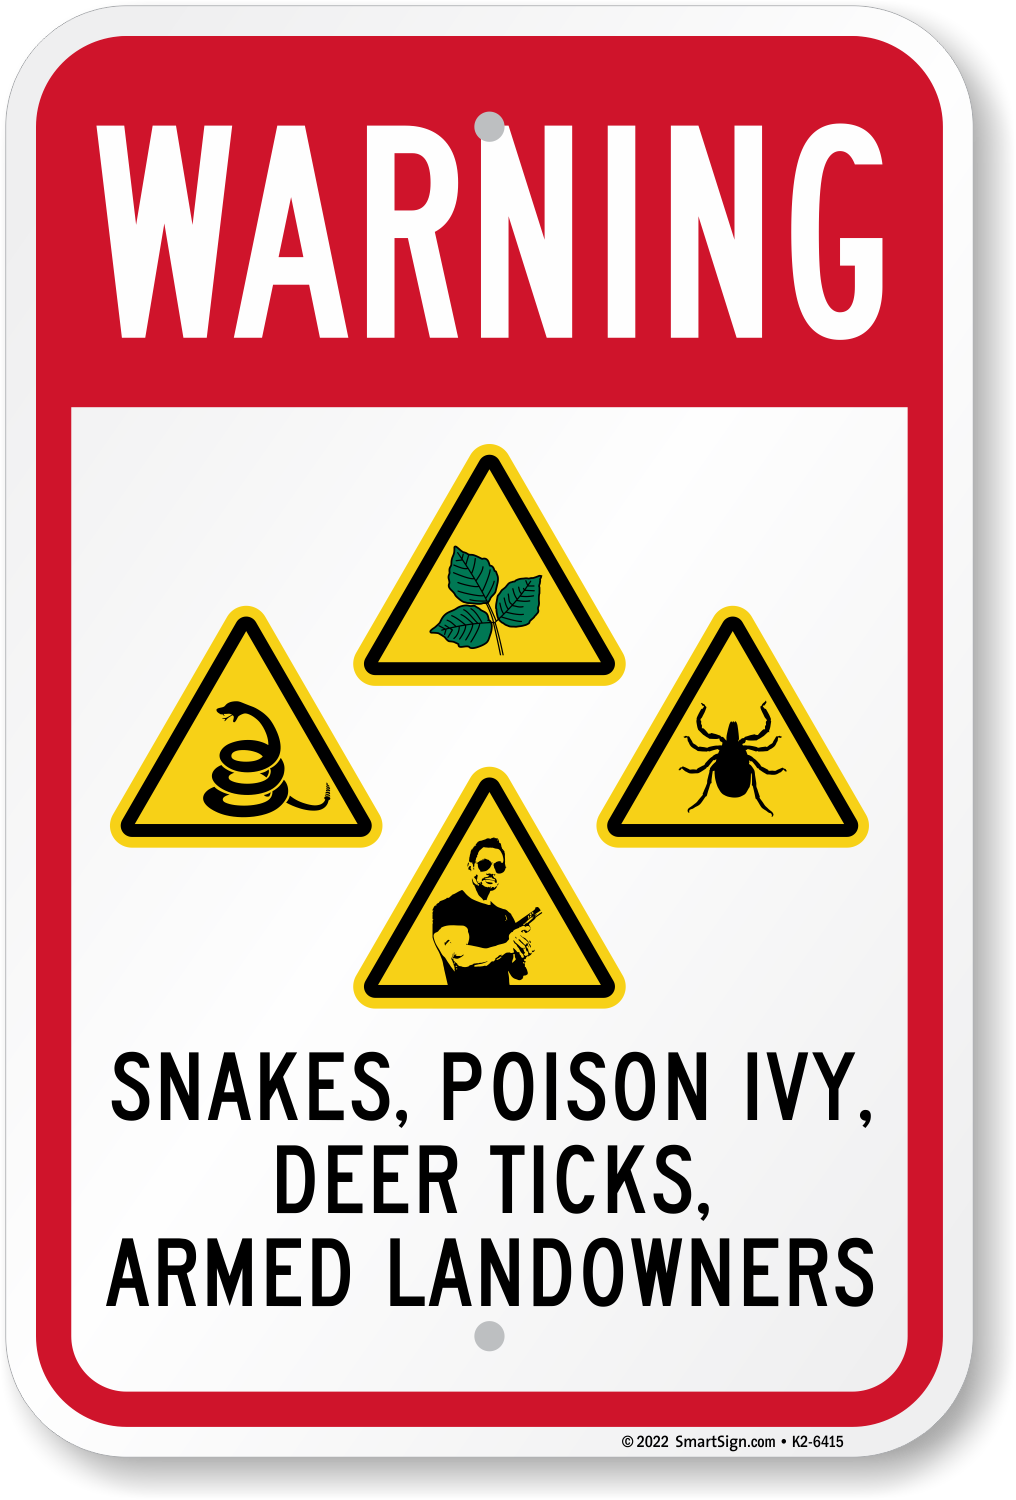 https://www.campgroundsigns.com/img/lg/K/snakes-poison-ivy-ticks-armed-landowners-warning-sign-k2-6415.png